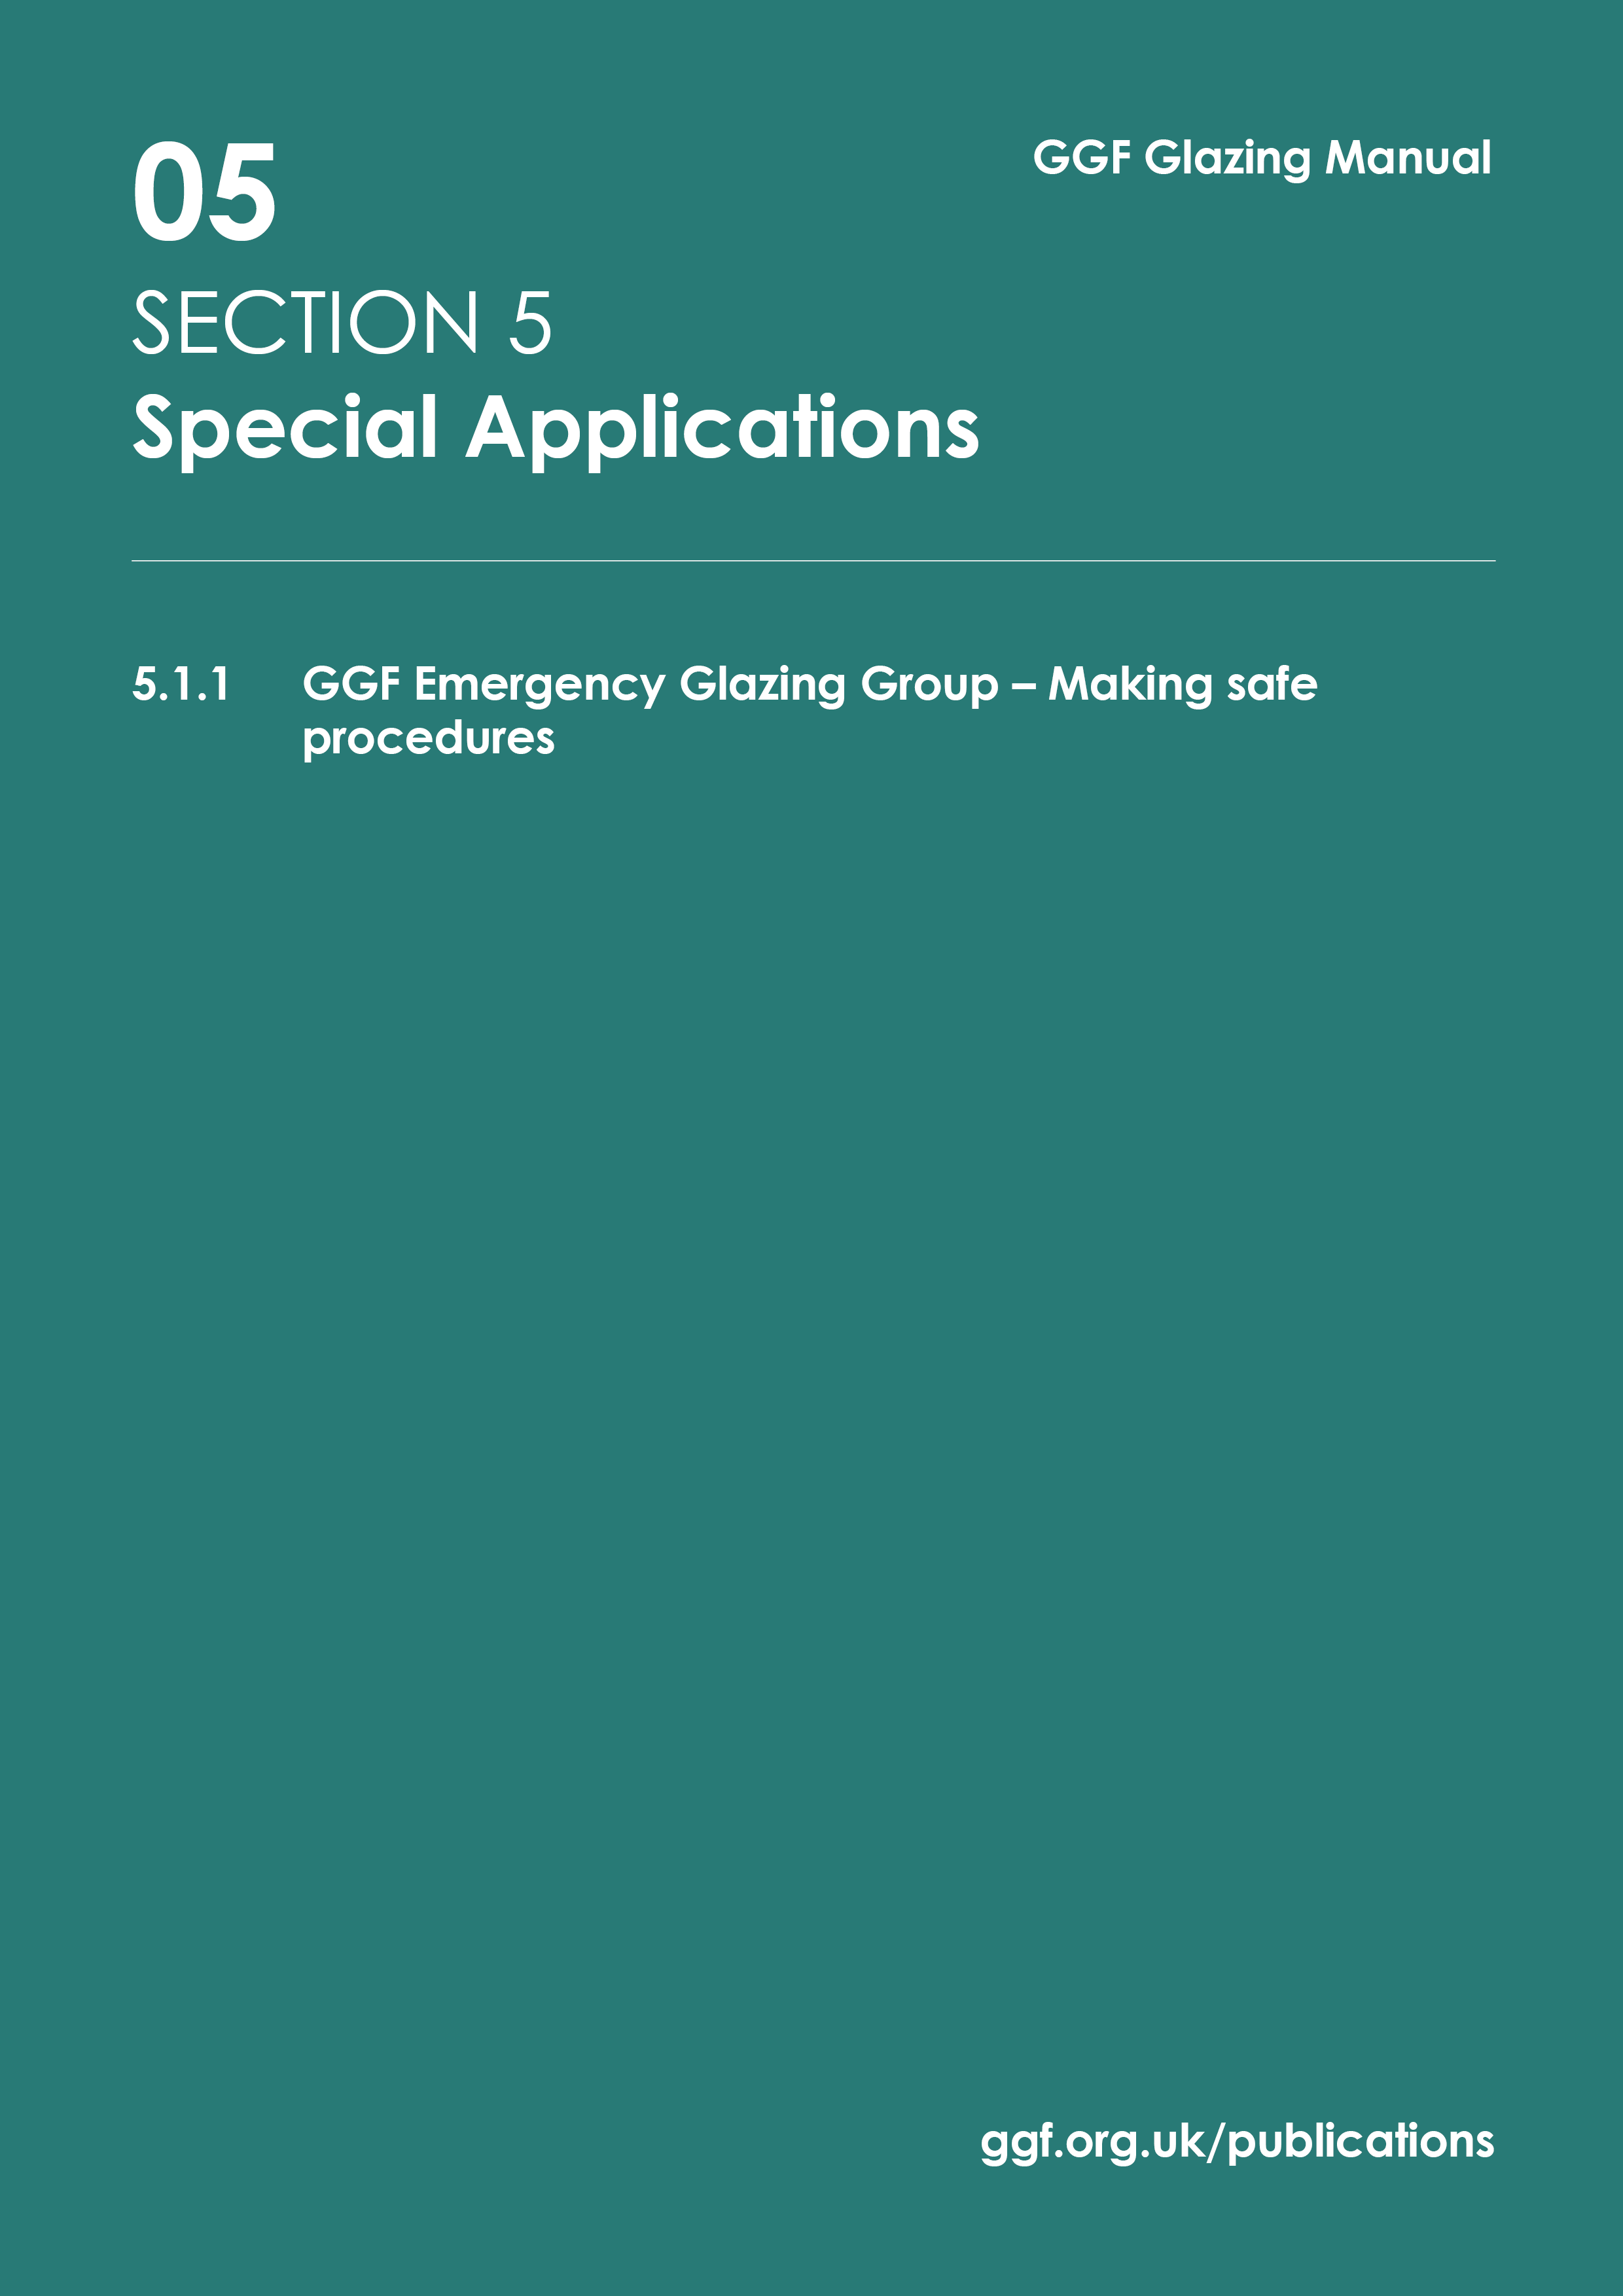 5.1.1 GGF Emergency Glazing Group - Making safe procedures